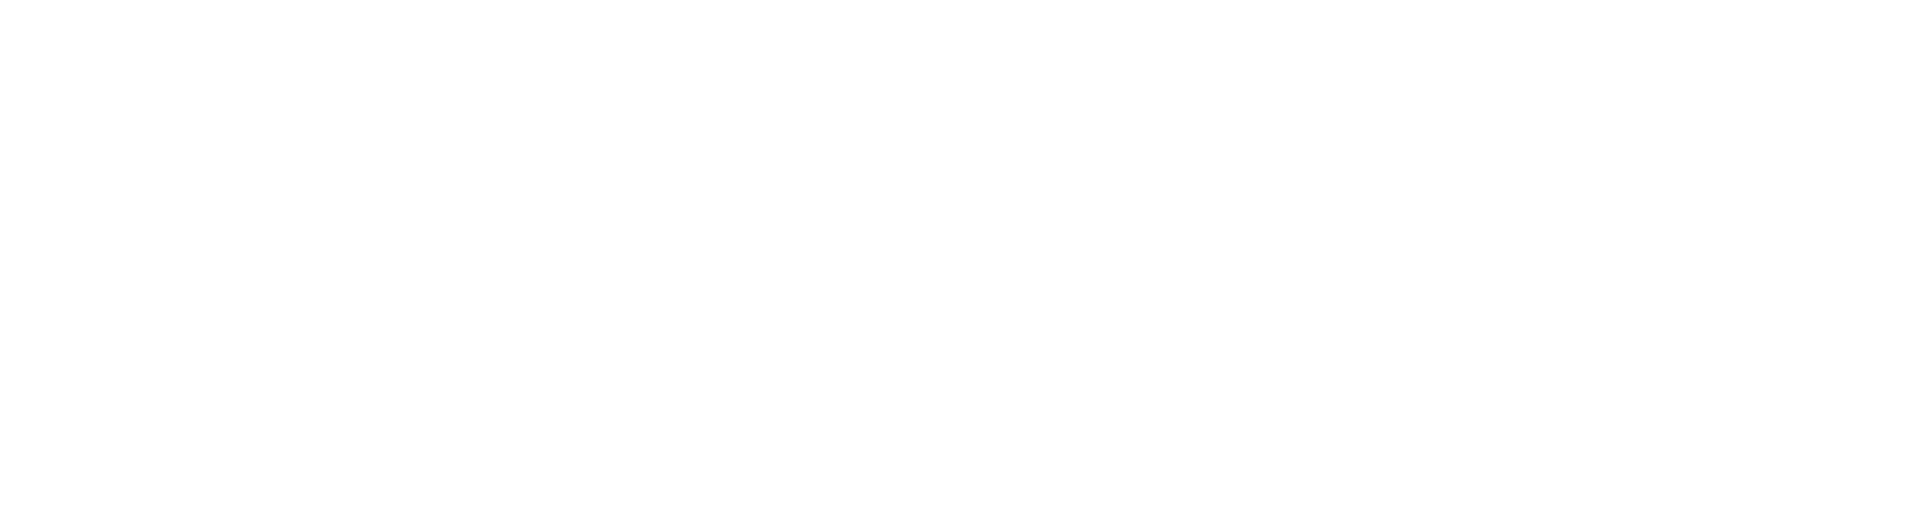 Rolando Cantu Attorney - Footer Logo